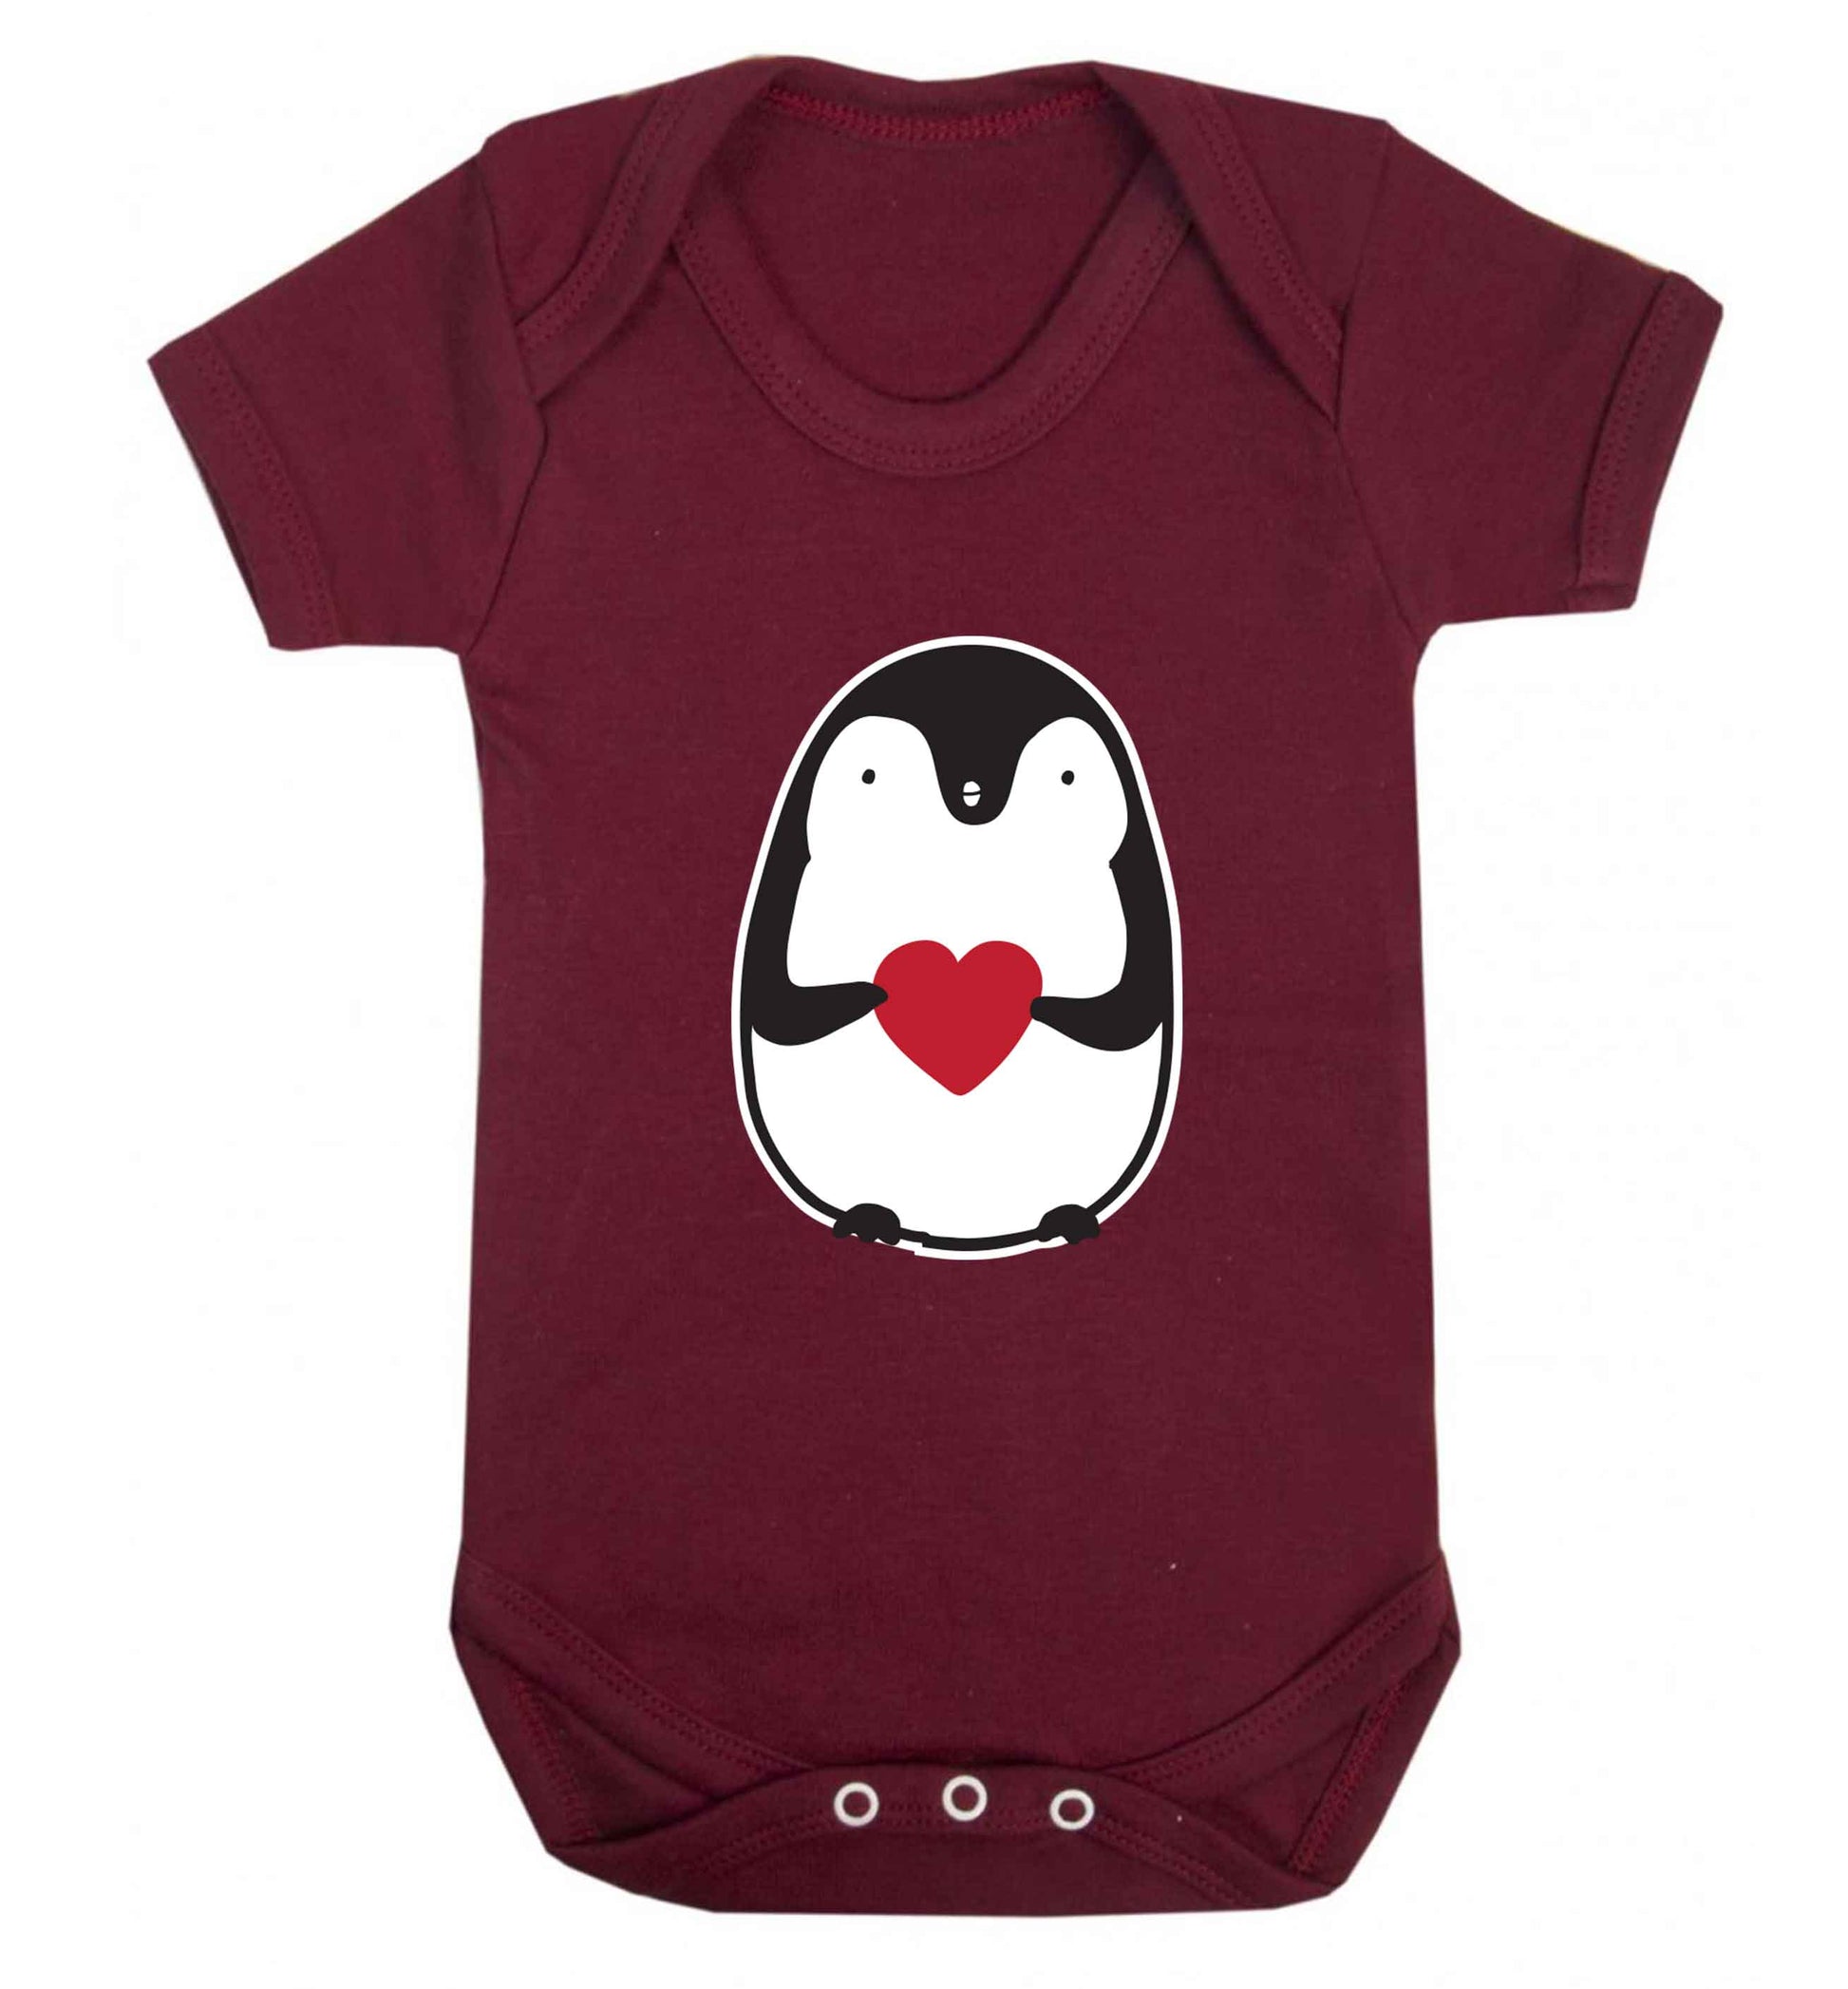 Cute penguin heart baby vest maroon 18-24 months